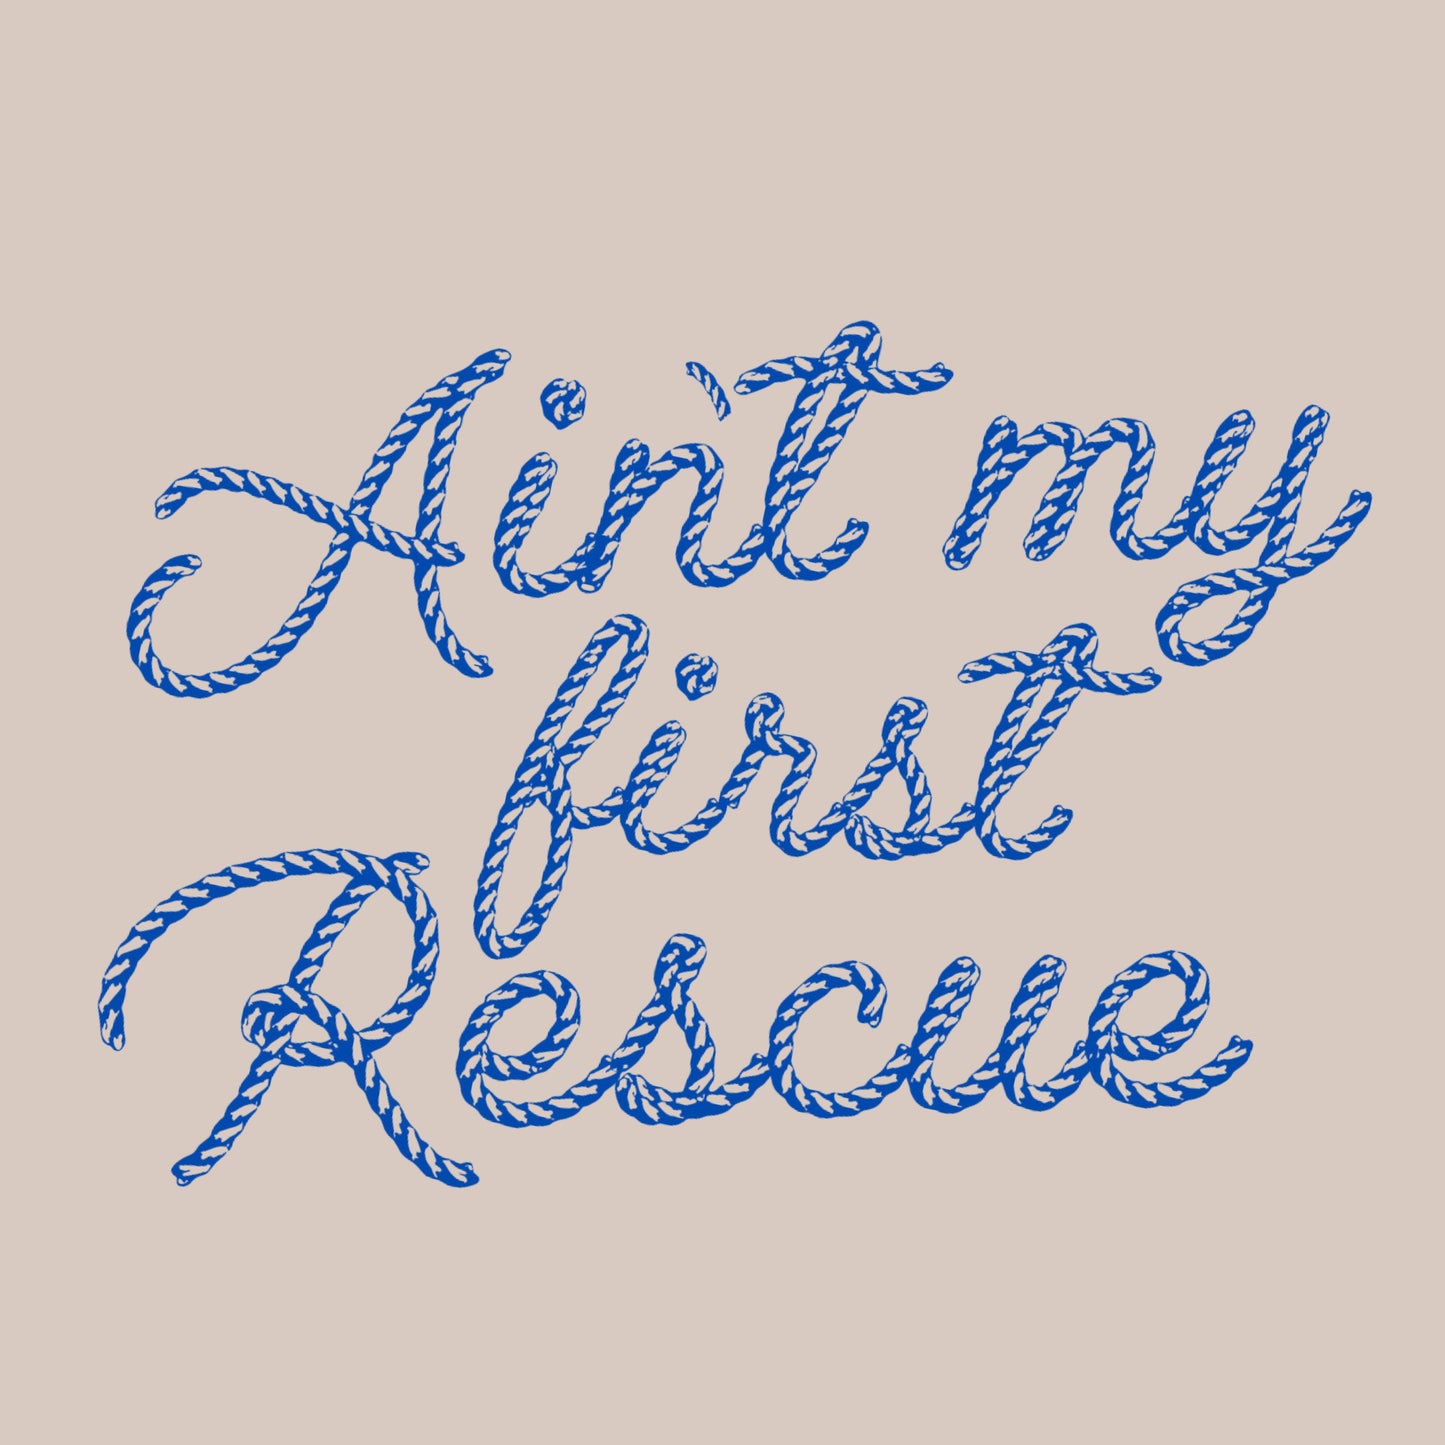 Ain’t My First Rescue in Khaki